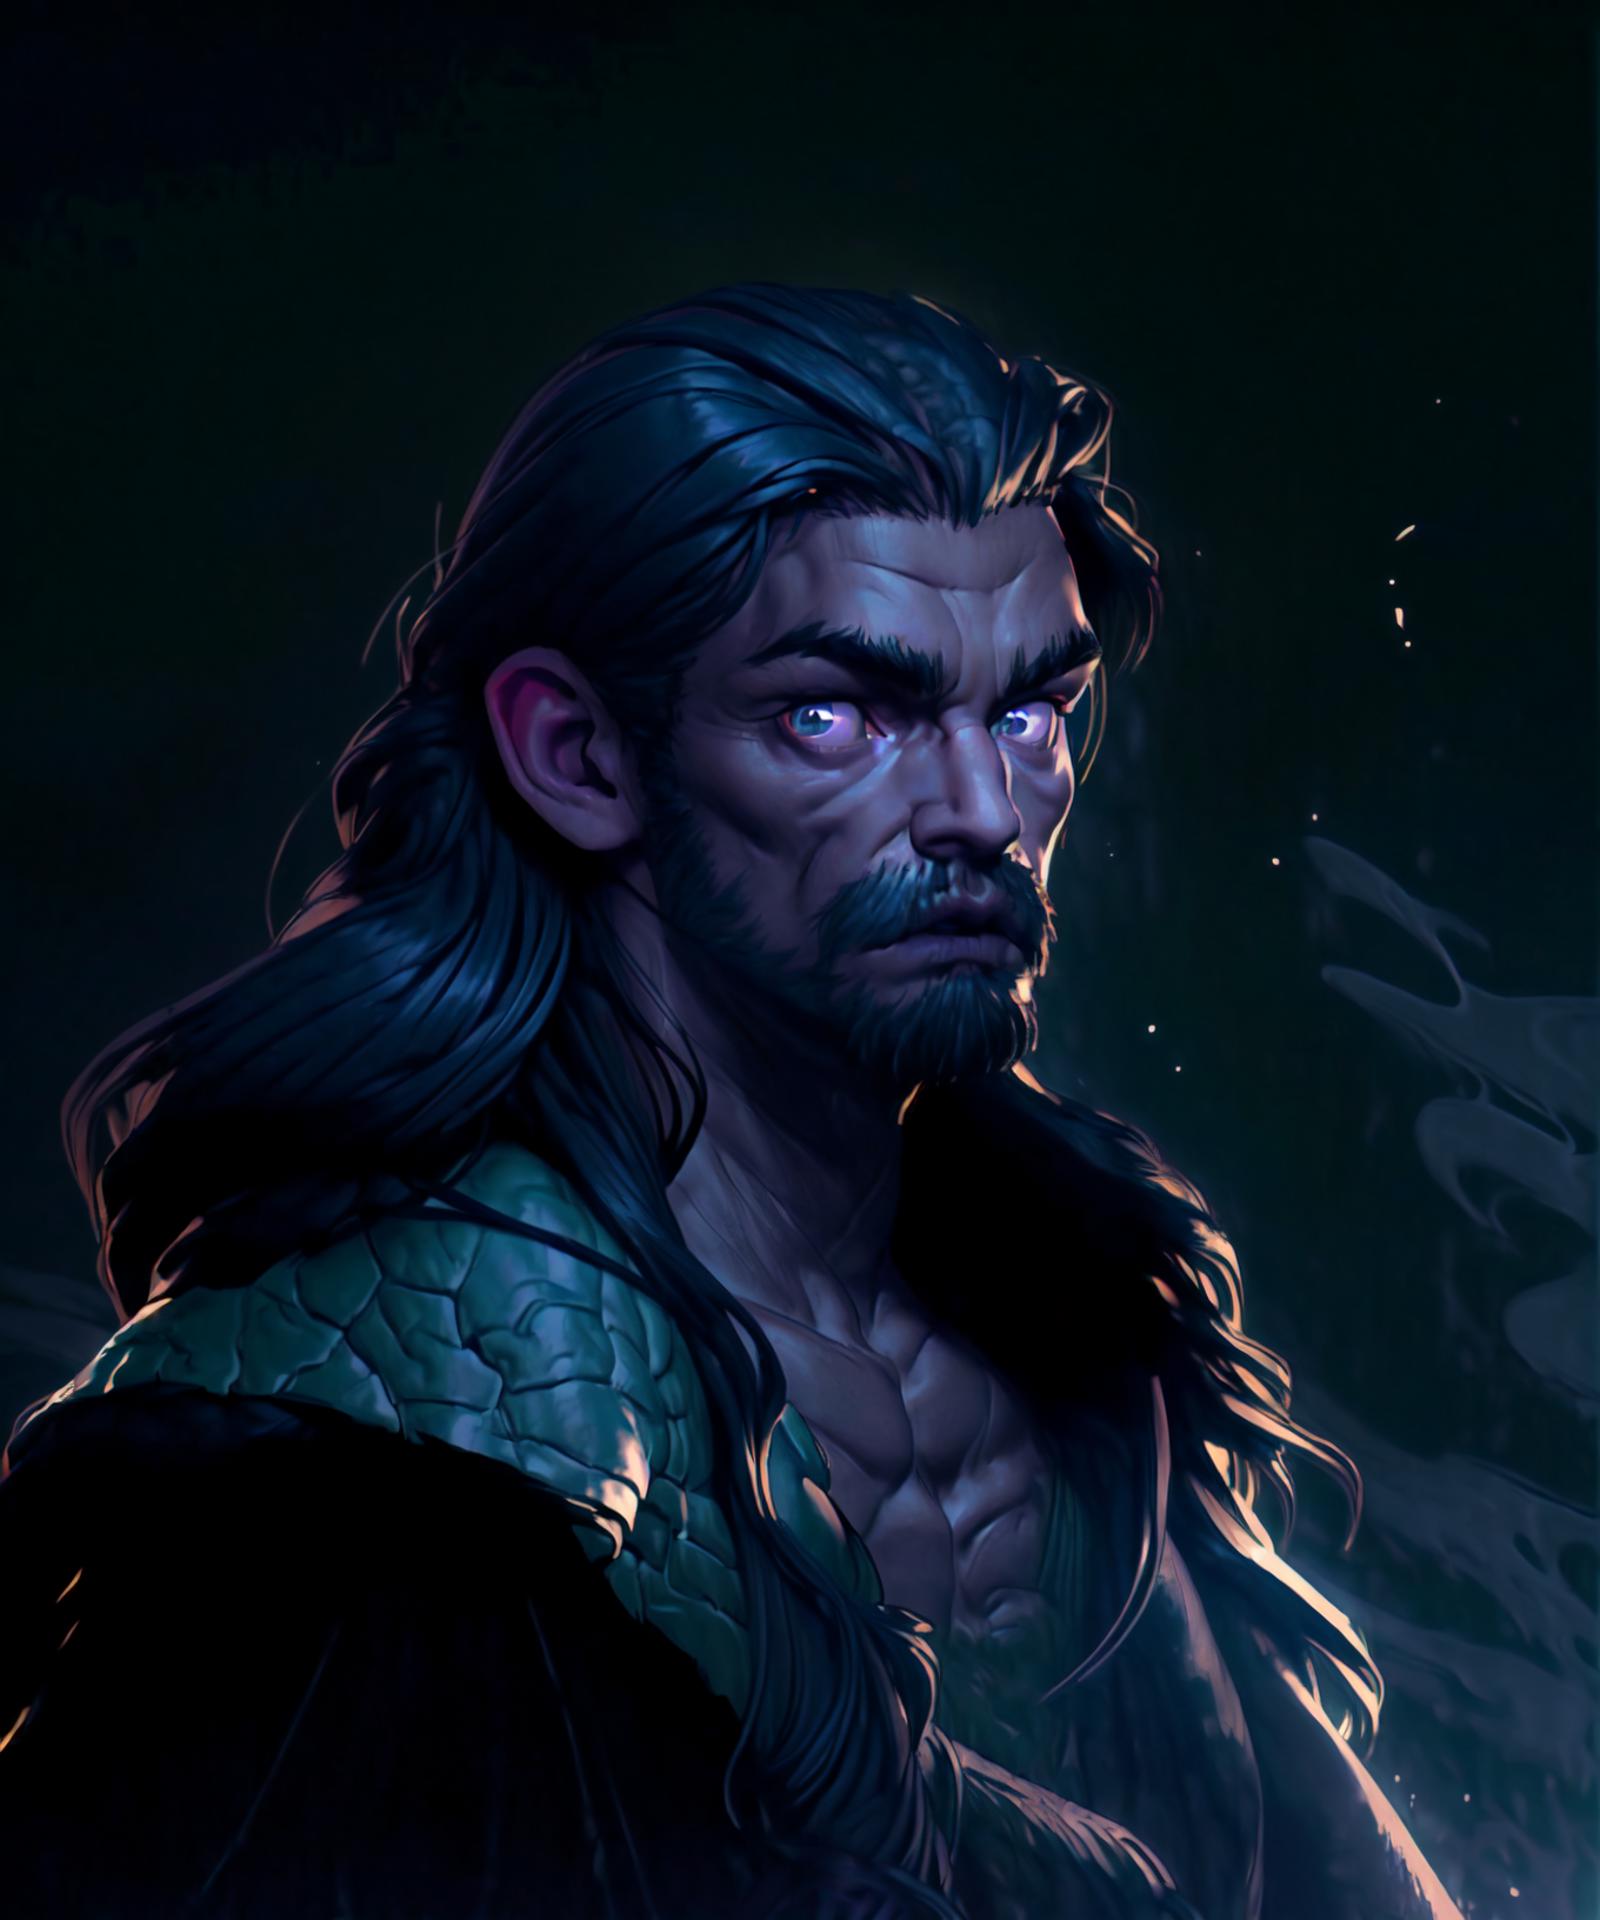 Dark Fantasy Art: A Bearded, Long-Haired Warrior With Purple Eyes